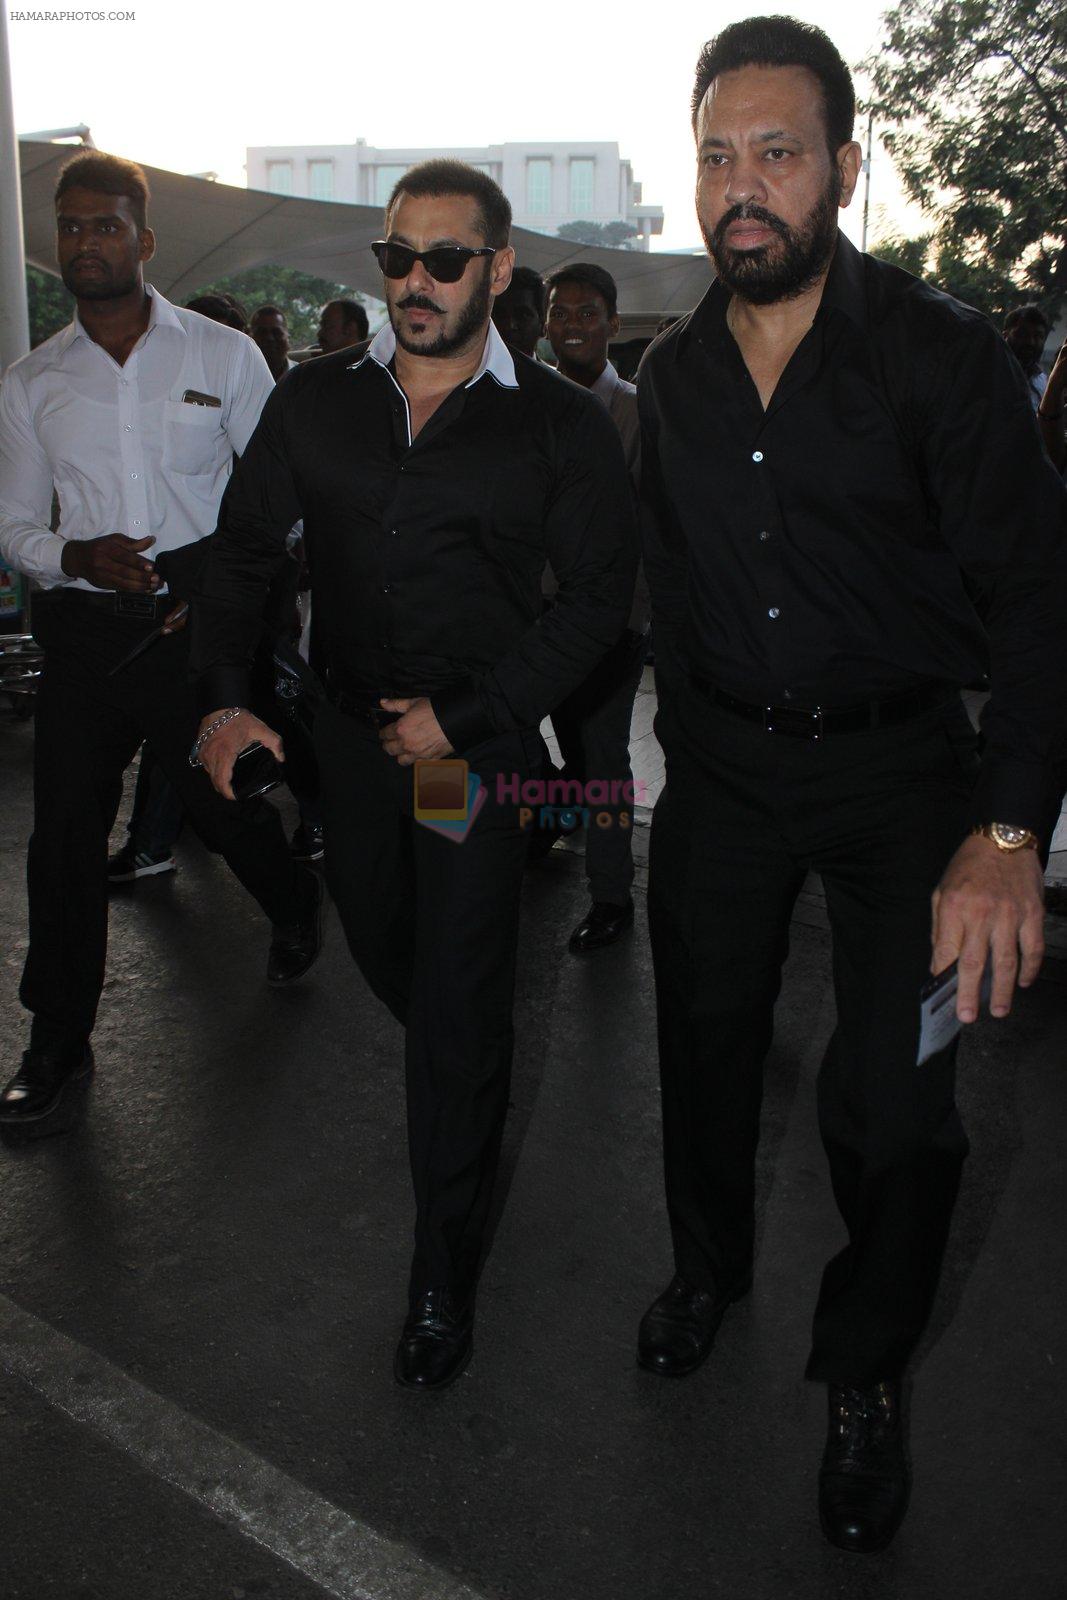 Salman Khan snapped at airport on 5th Feb 2016